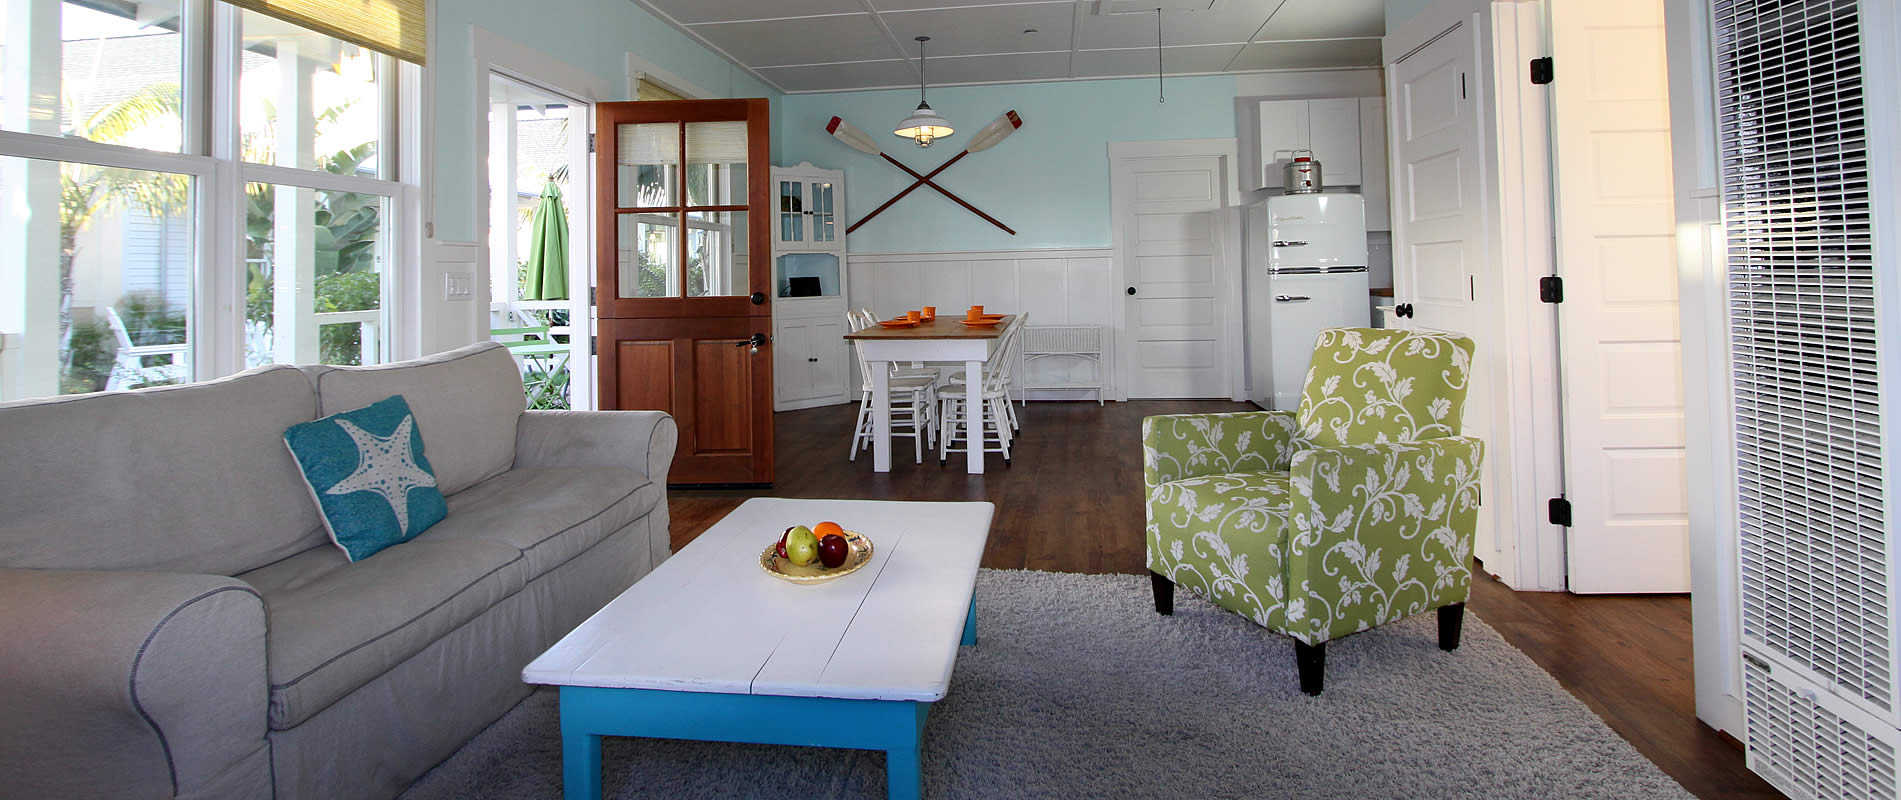 santa barbara coast vacation cottages rentals for families